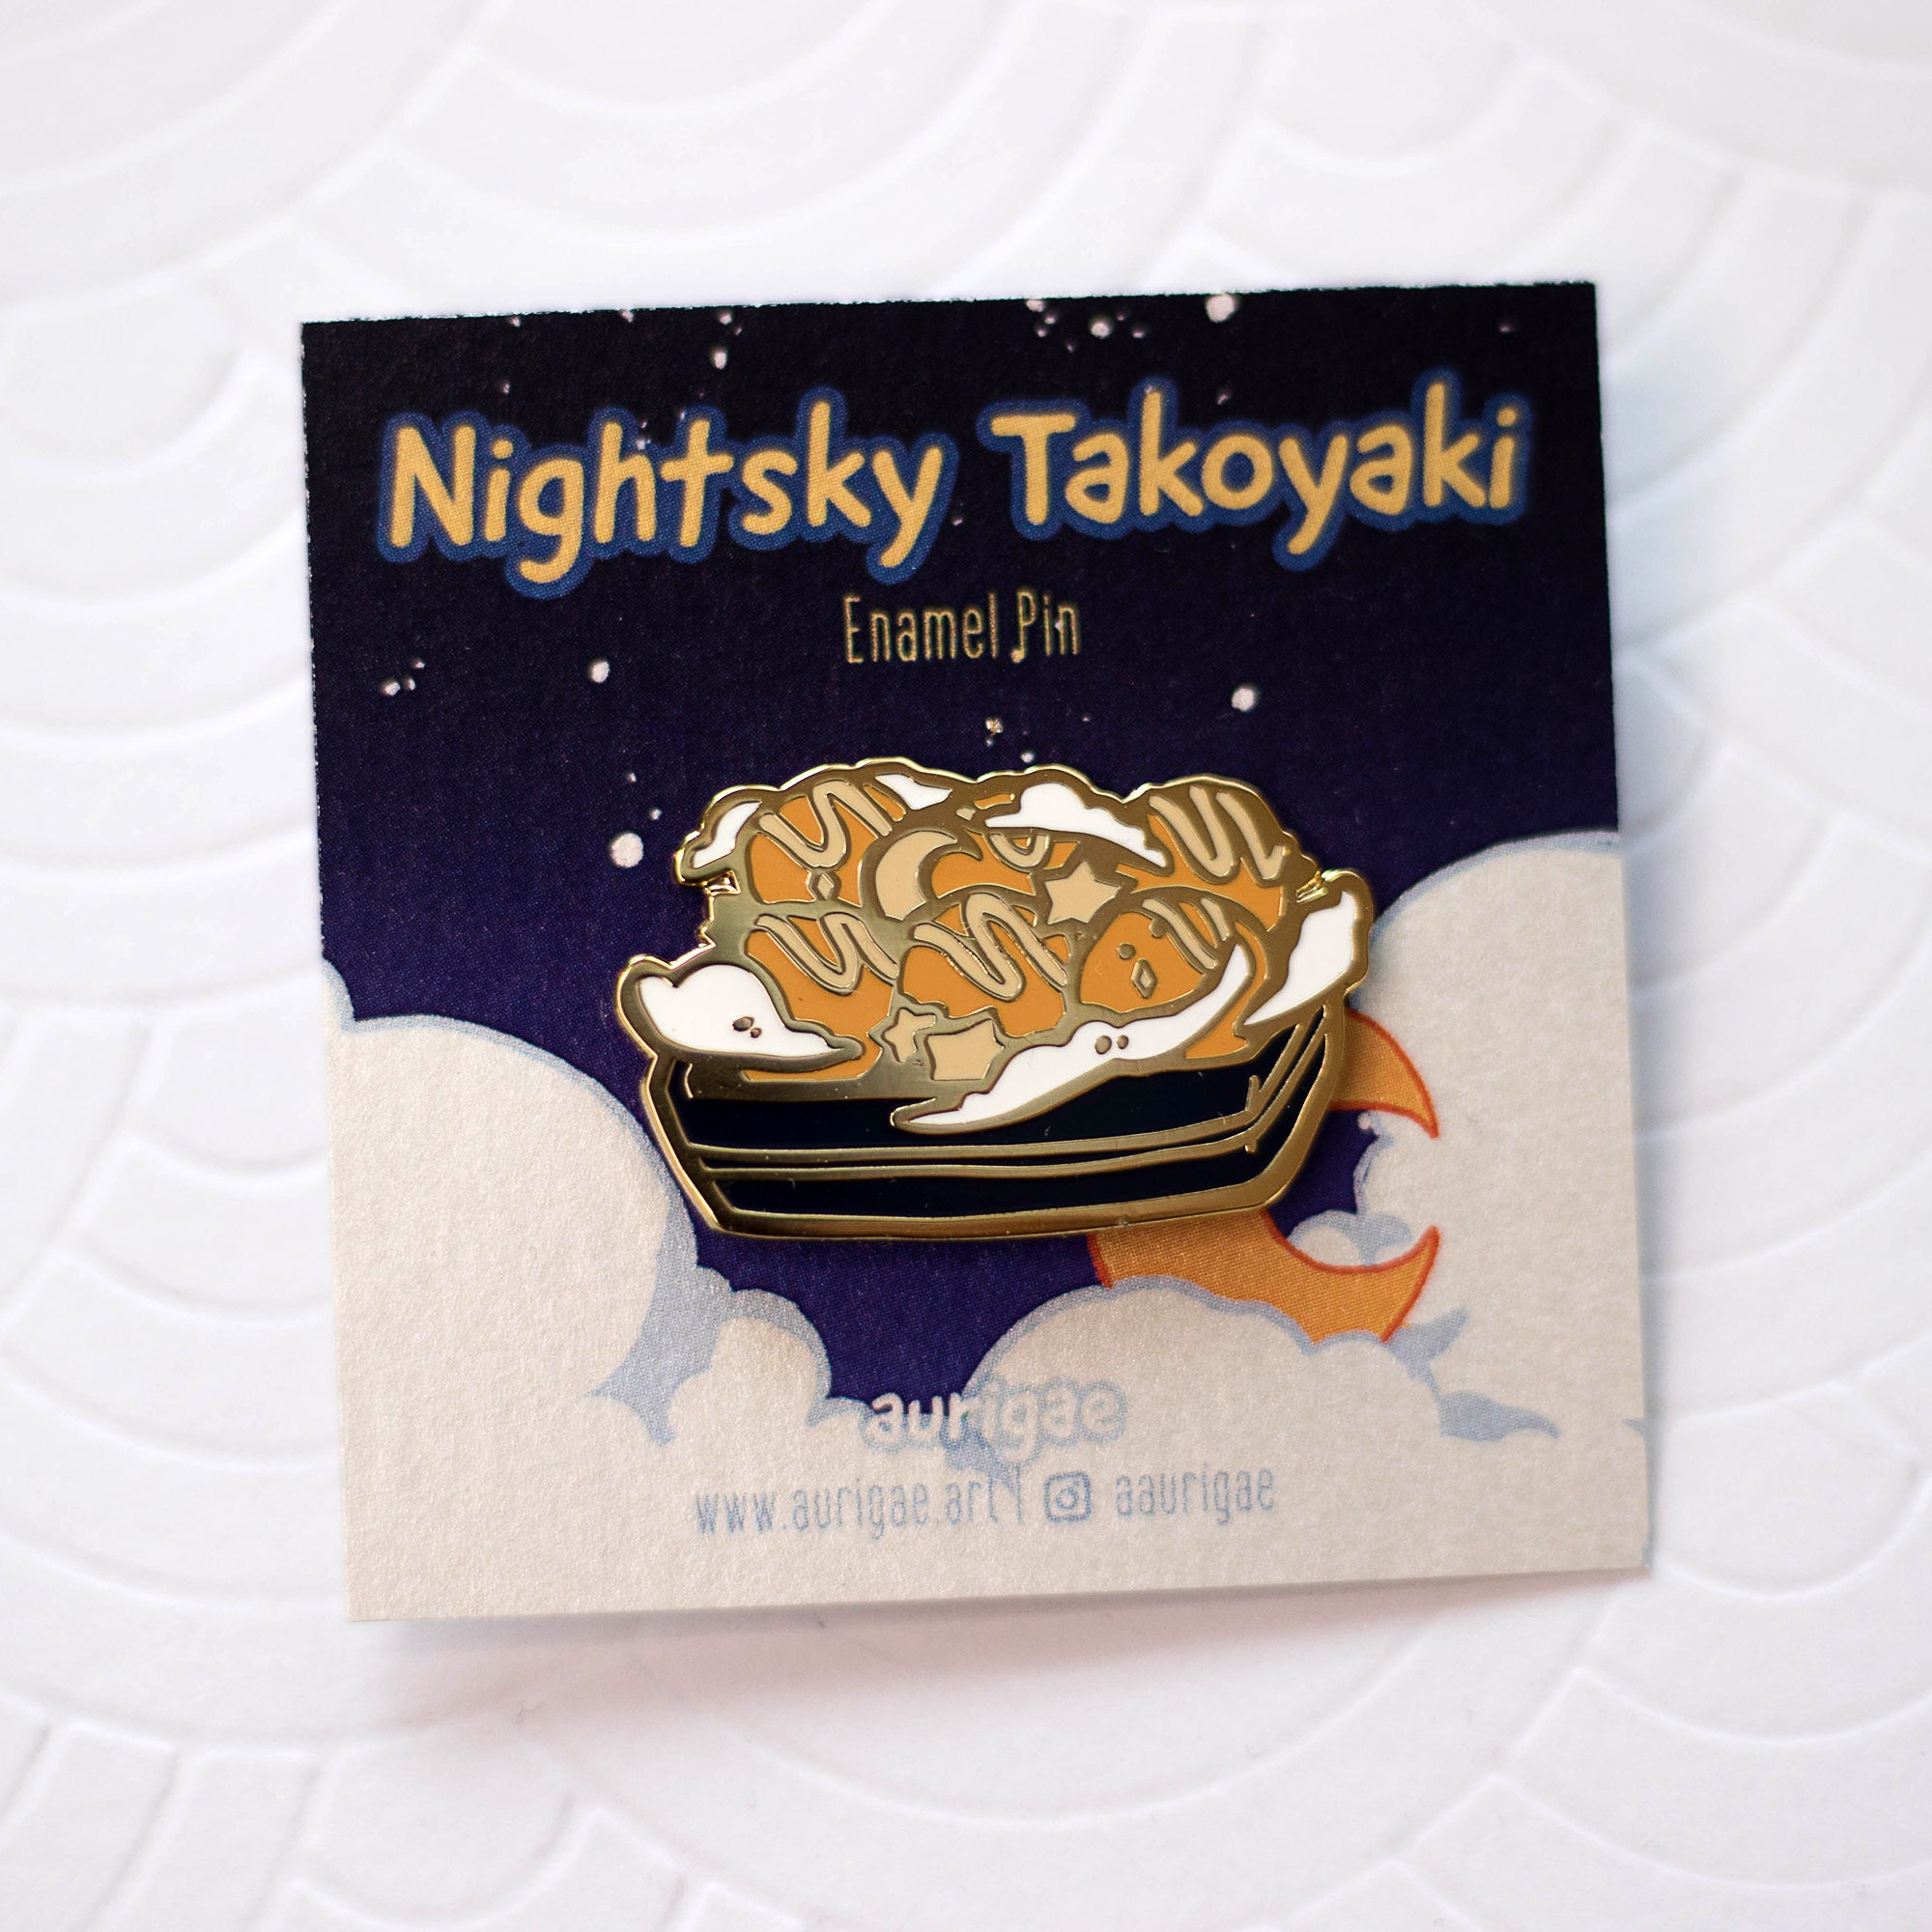 Nightsky Takoyaki | Enamel Pin - Aurigae Art &Illustration